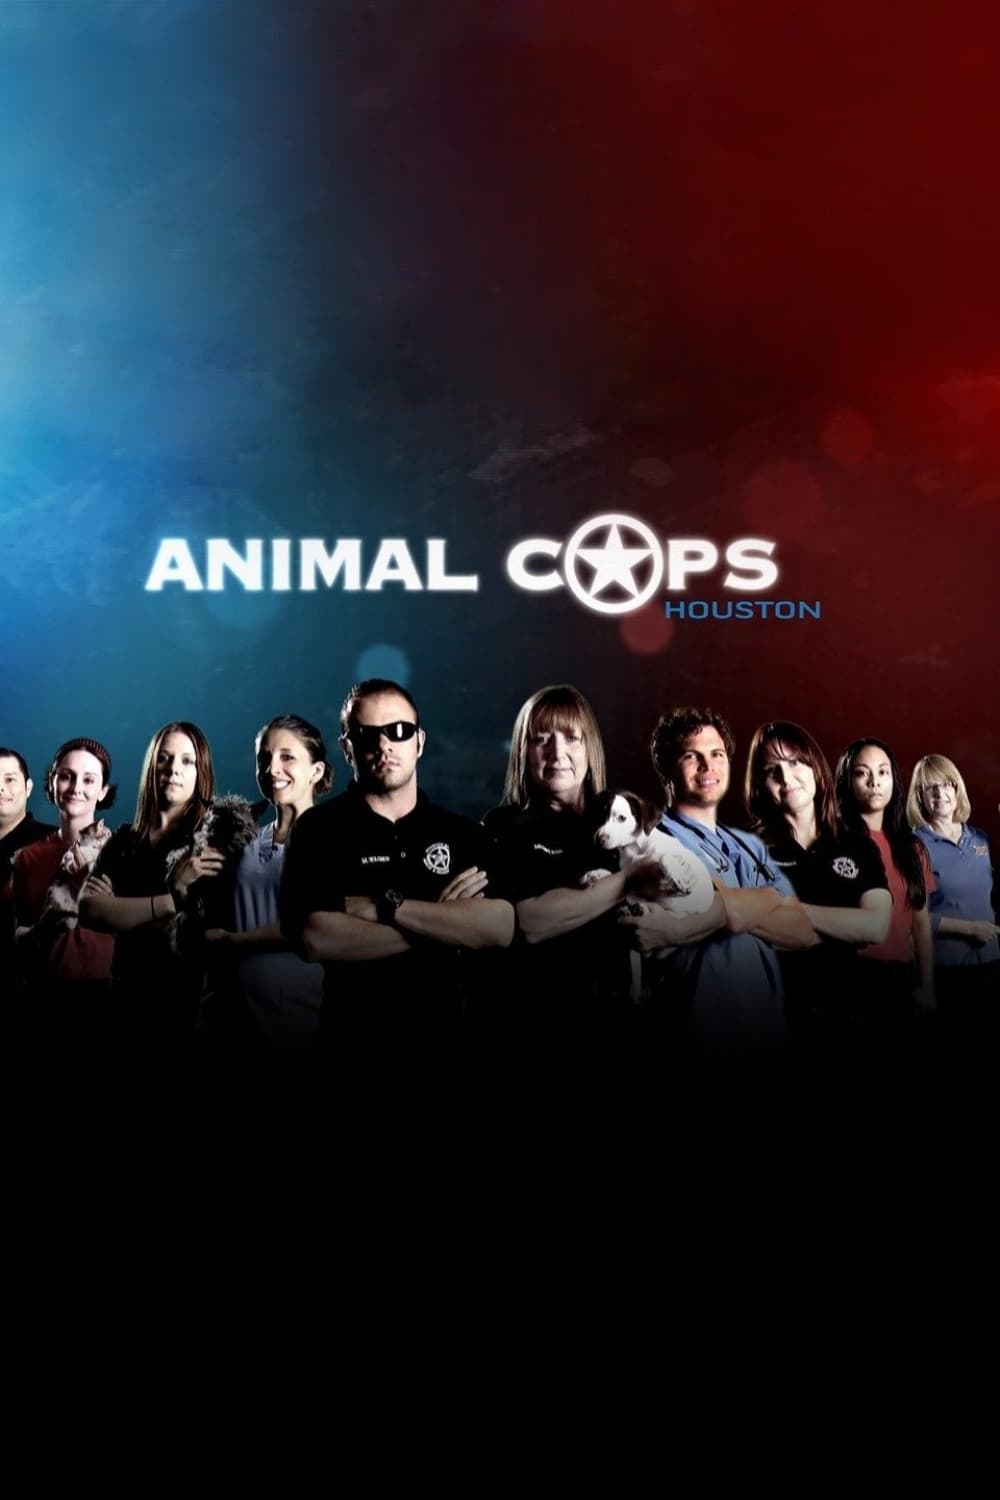 Caratula de Animal Cops: Houston (Animal Cops Houston) 